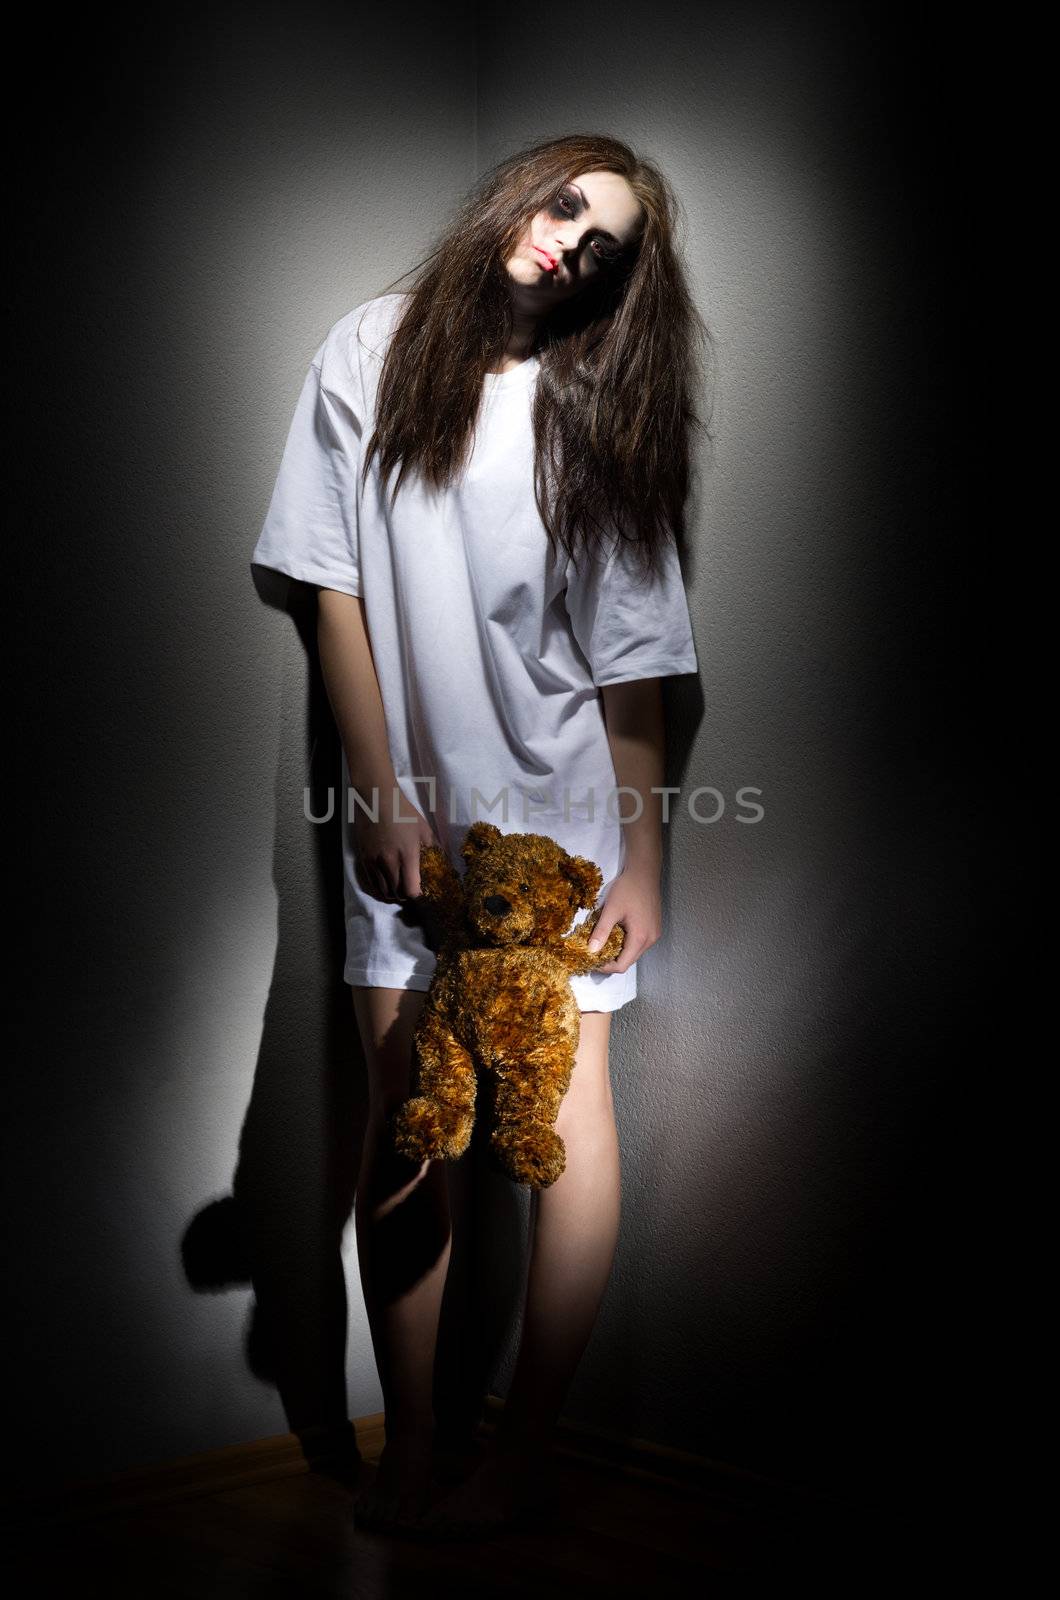 Zombie girl with plush teddy bear